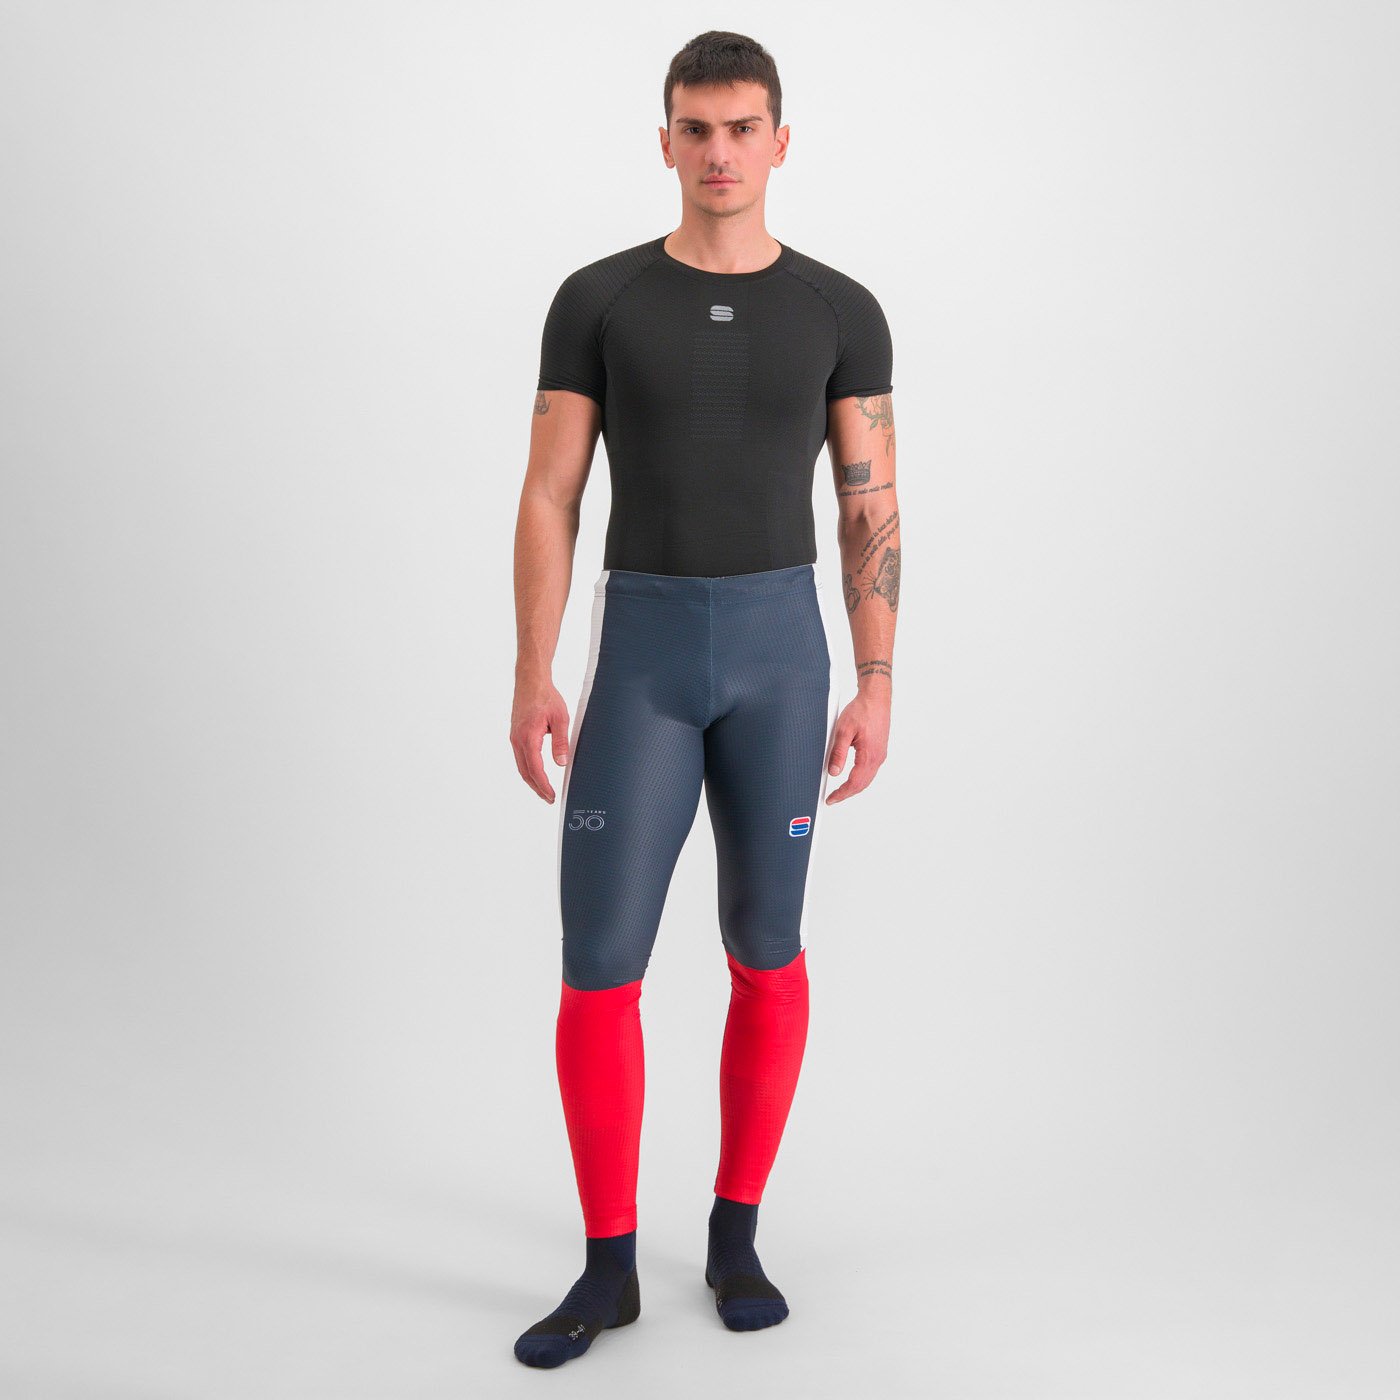 Sportful Apex Tight - Cross-country ski trousers Men's